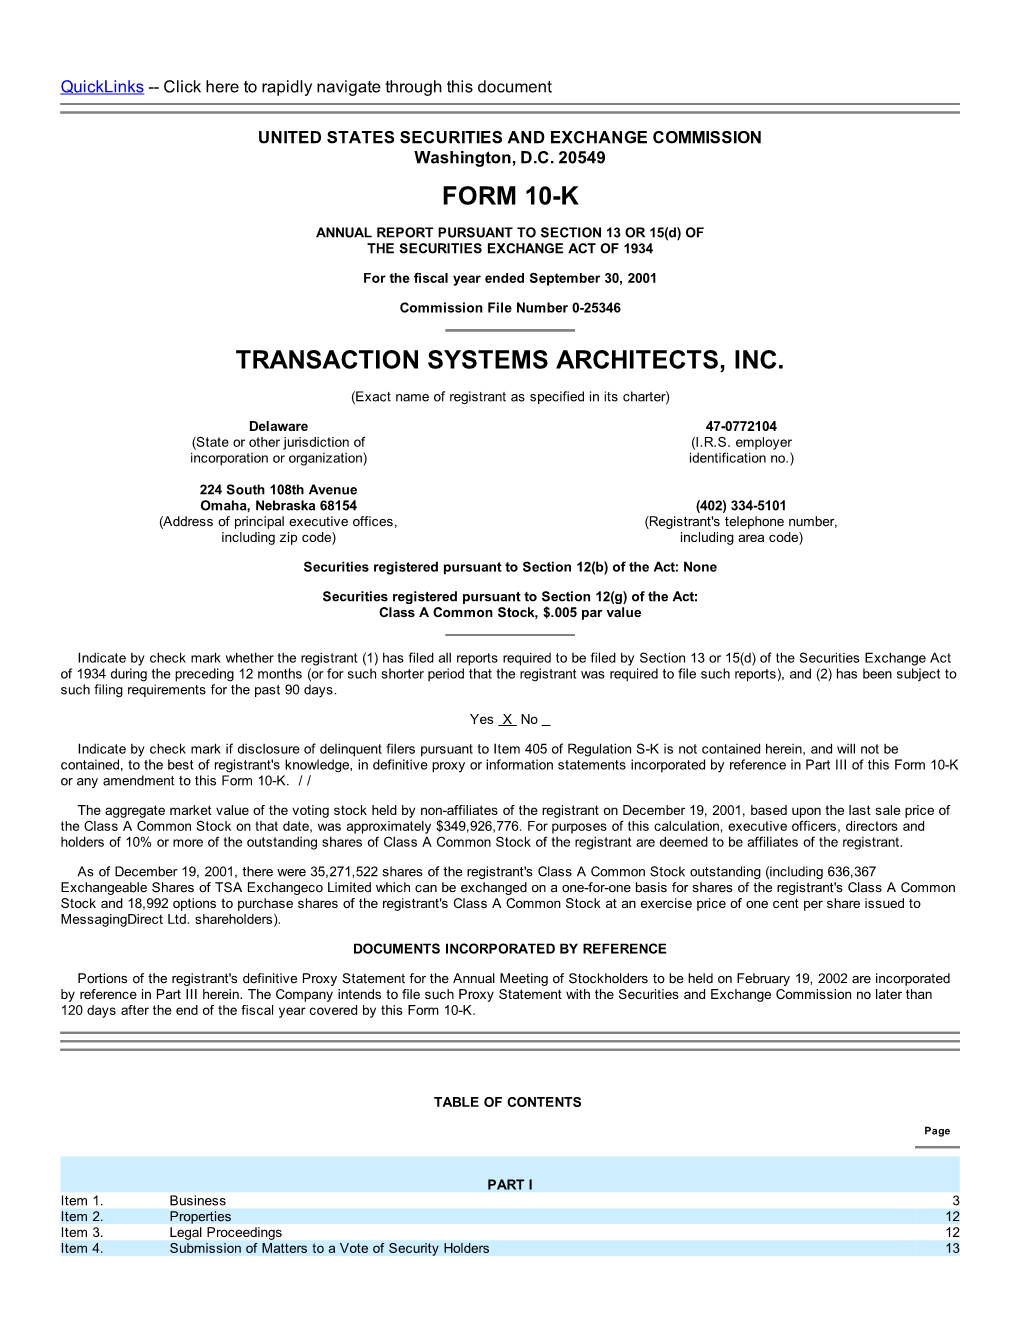 Form 10-K Transaction Systems Architects, Inc